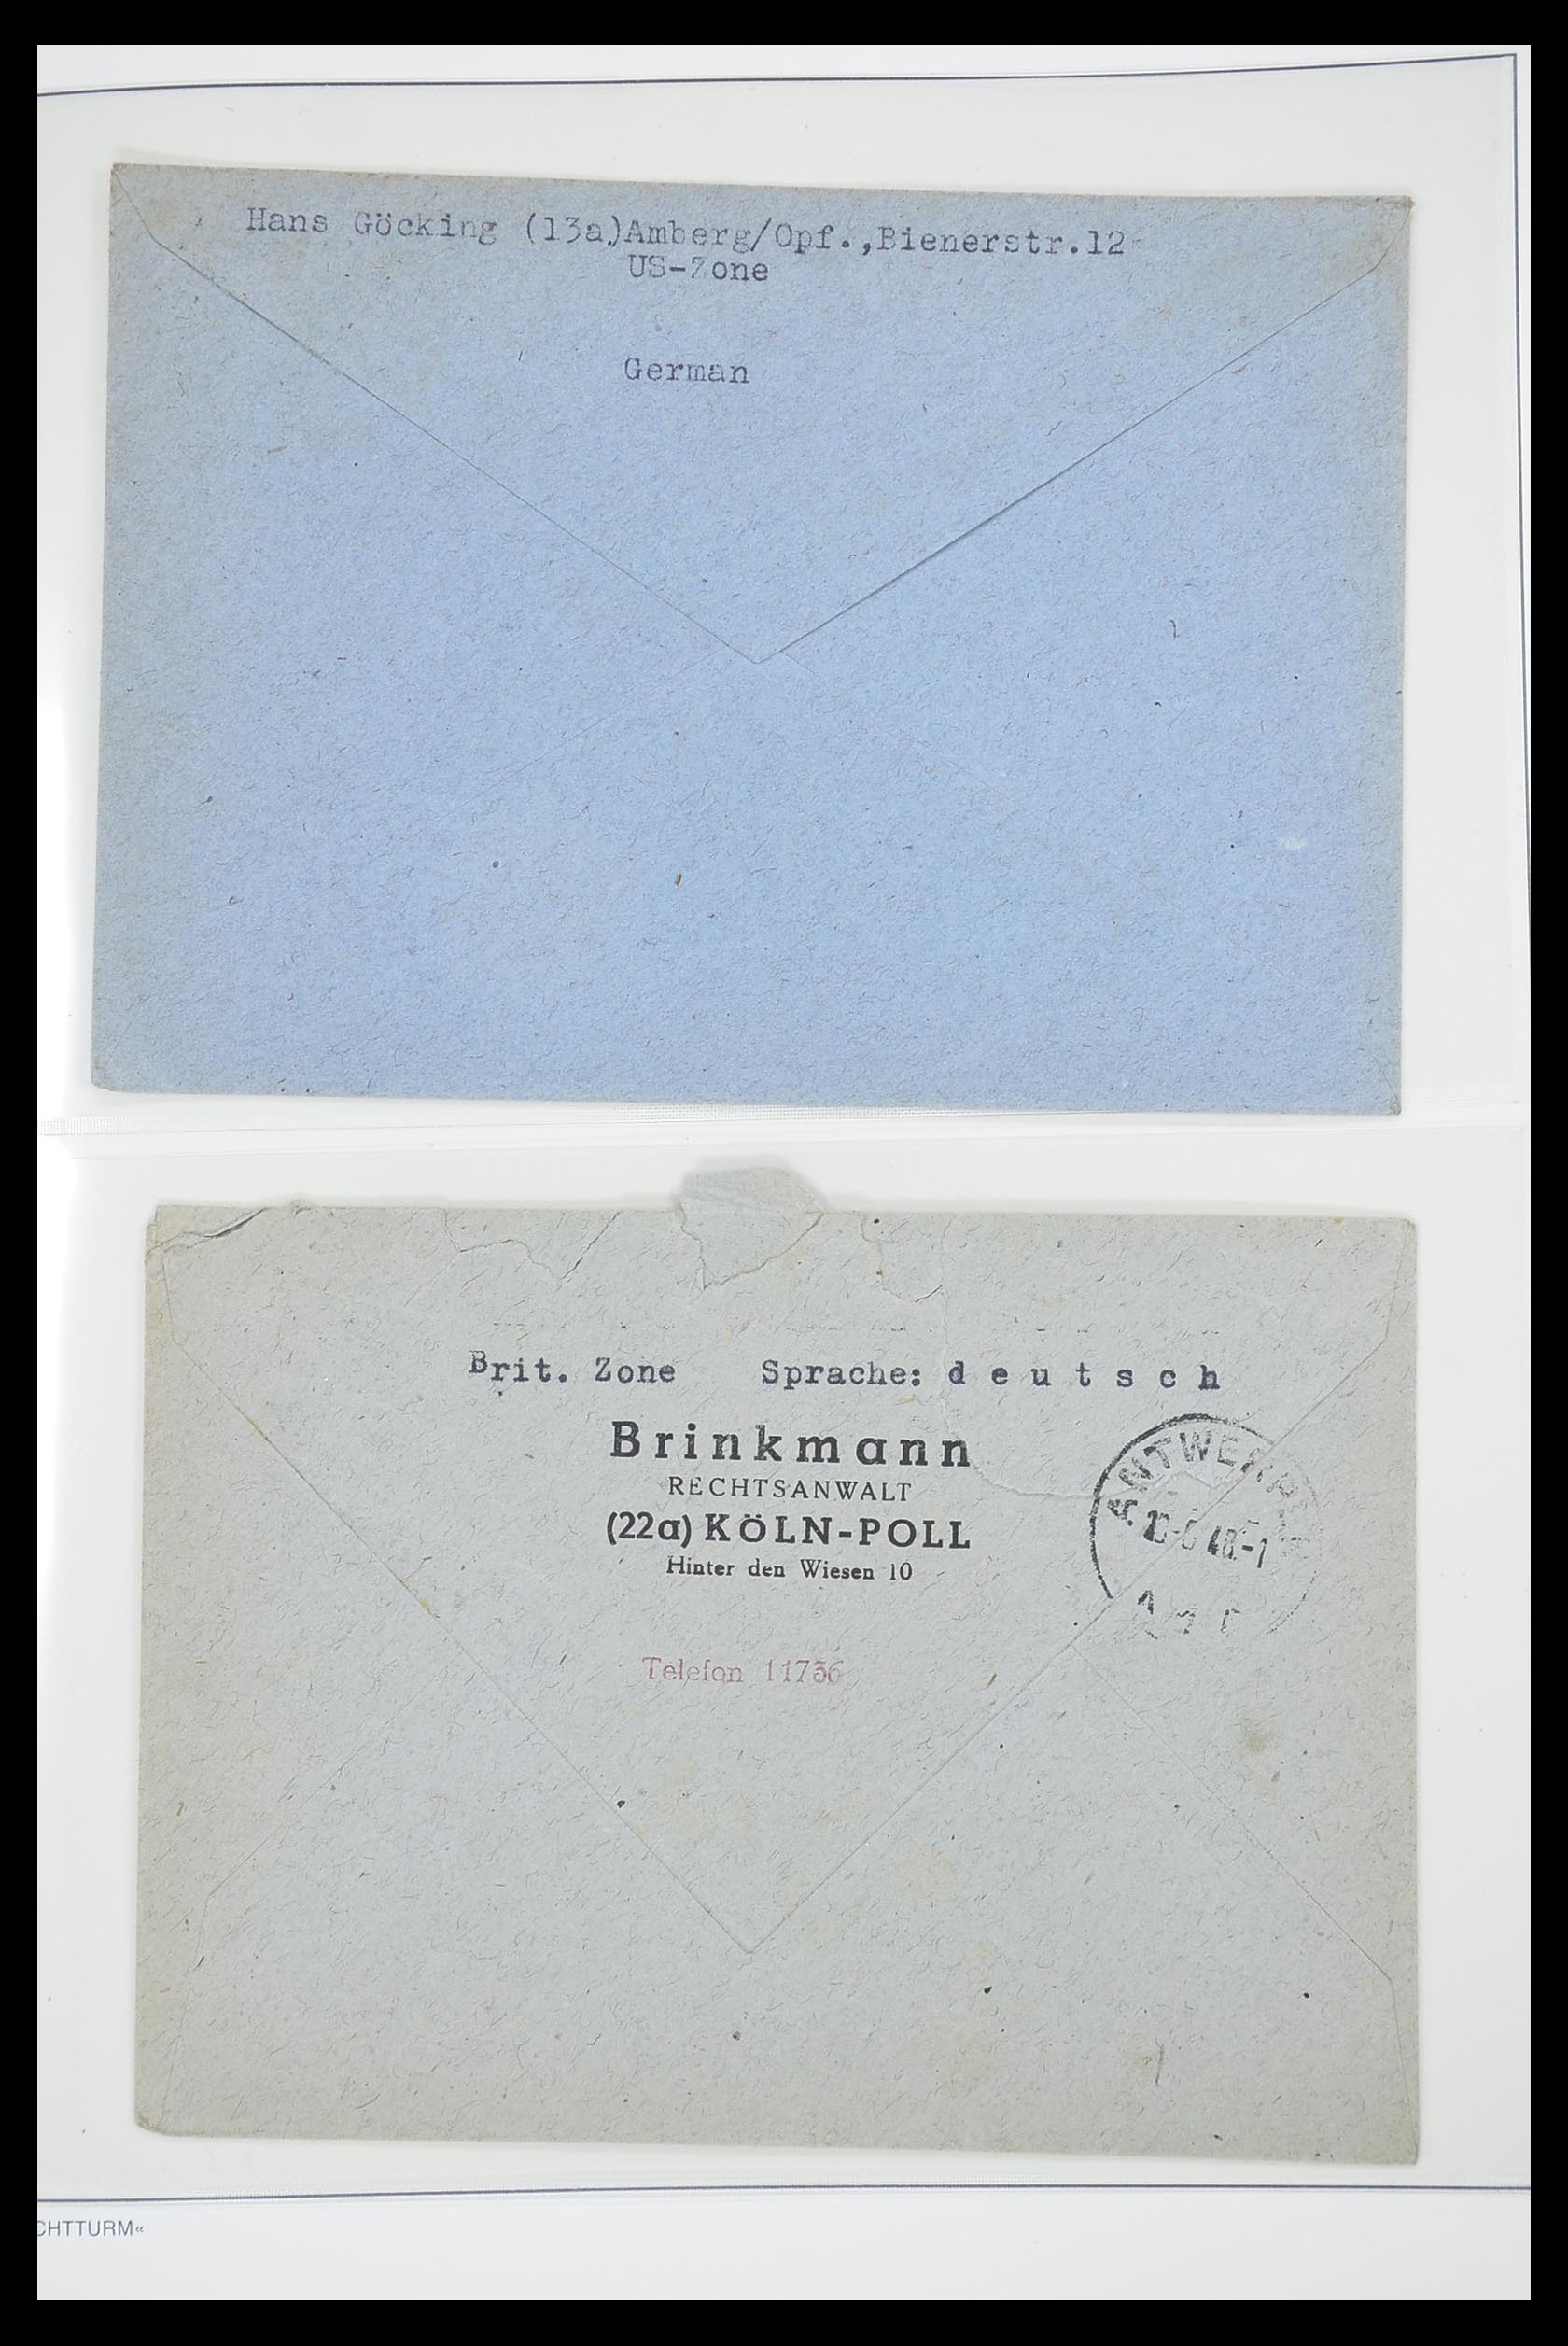 33837 058 - Stamp collection 33837 German Zones 1945-1948.